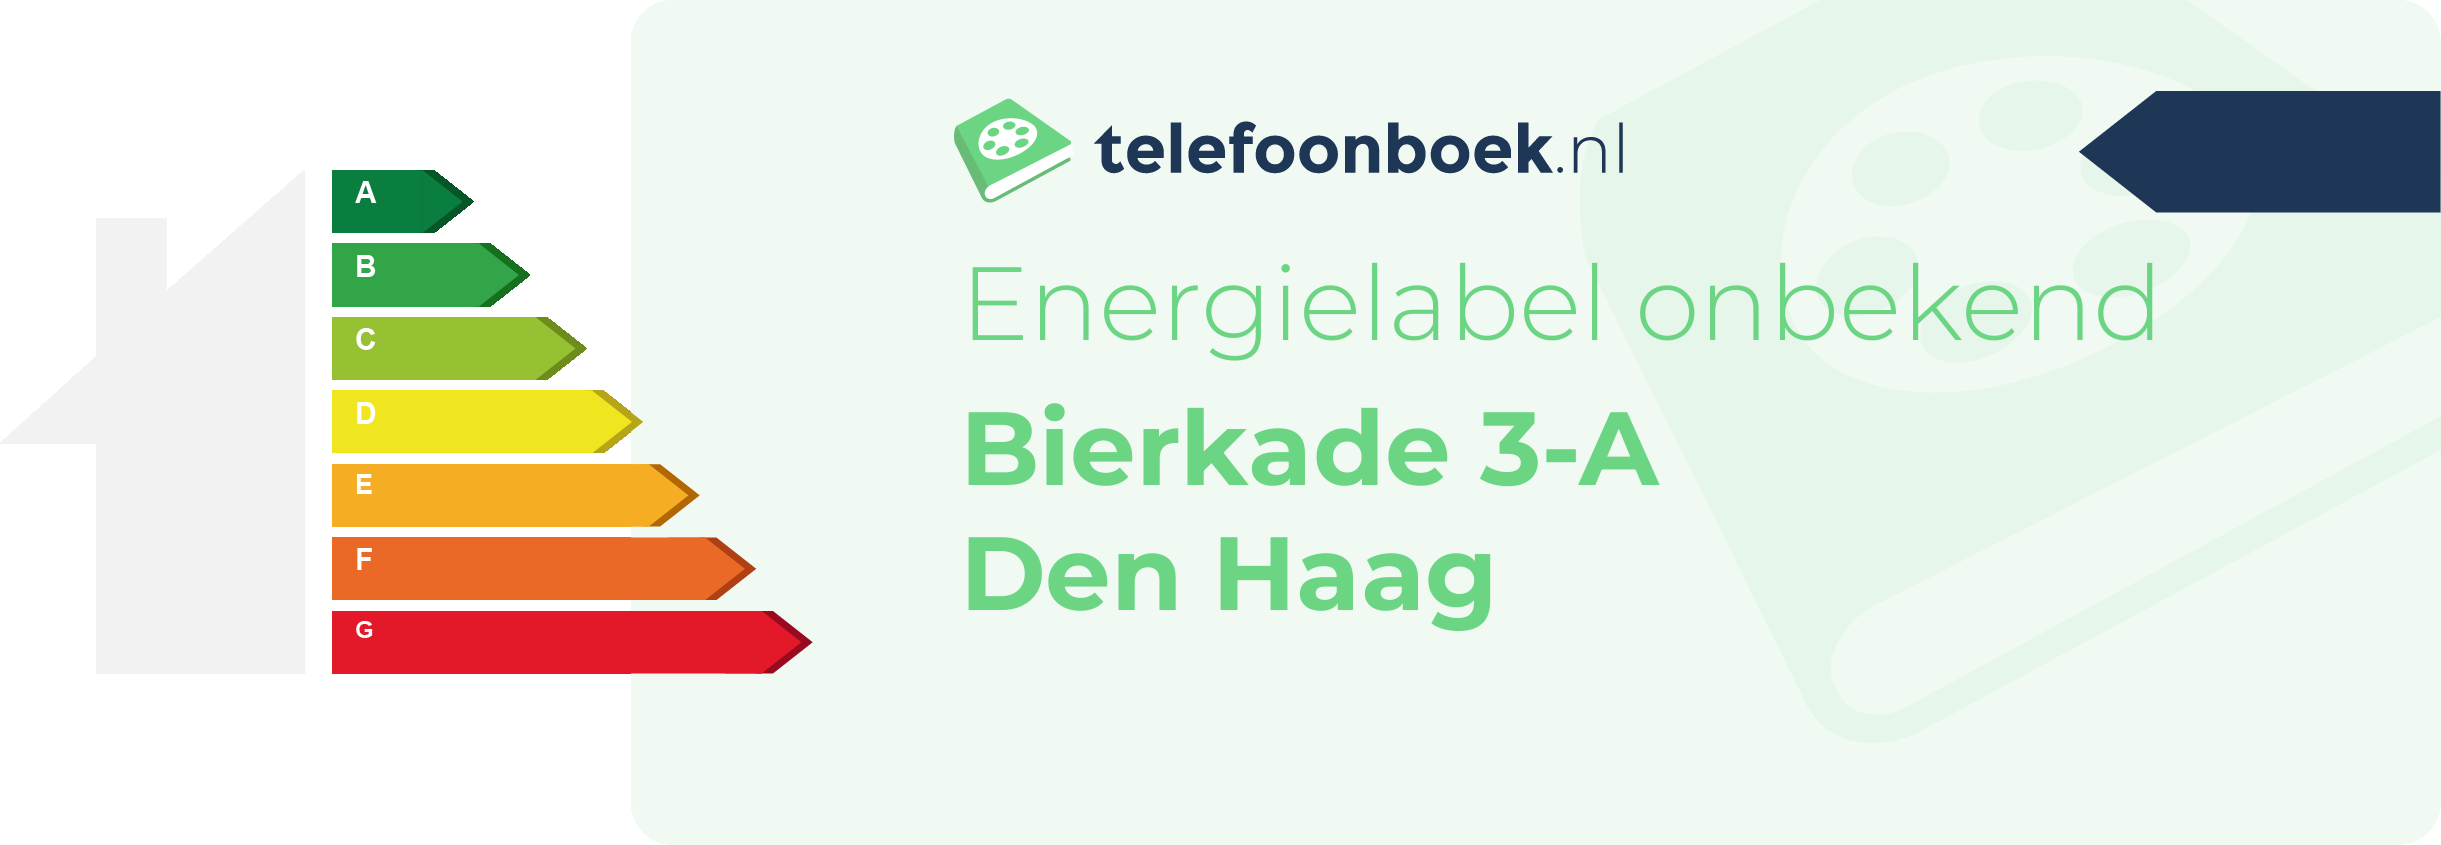 Energielabel Bierkade 3-A Den Haag